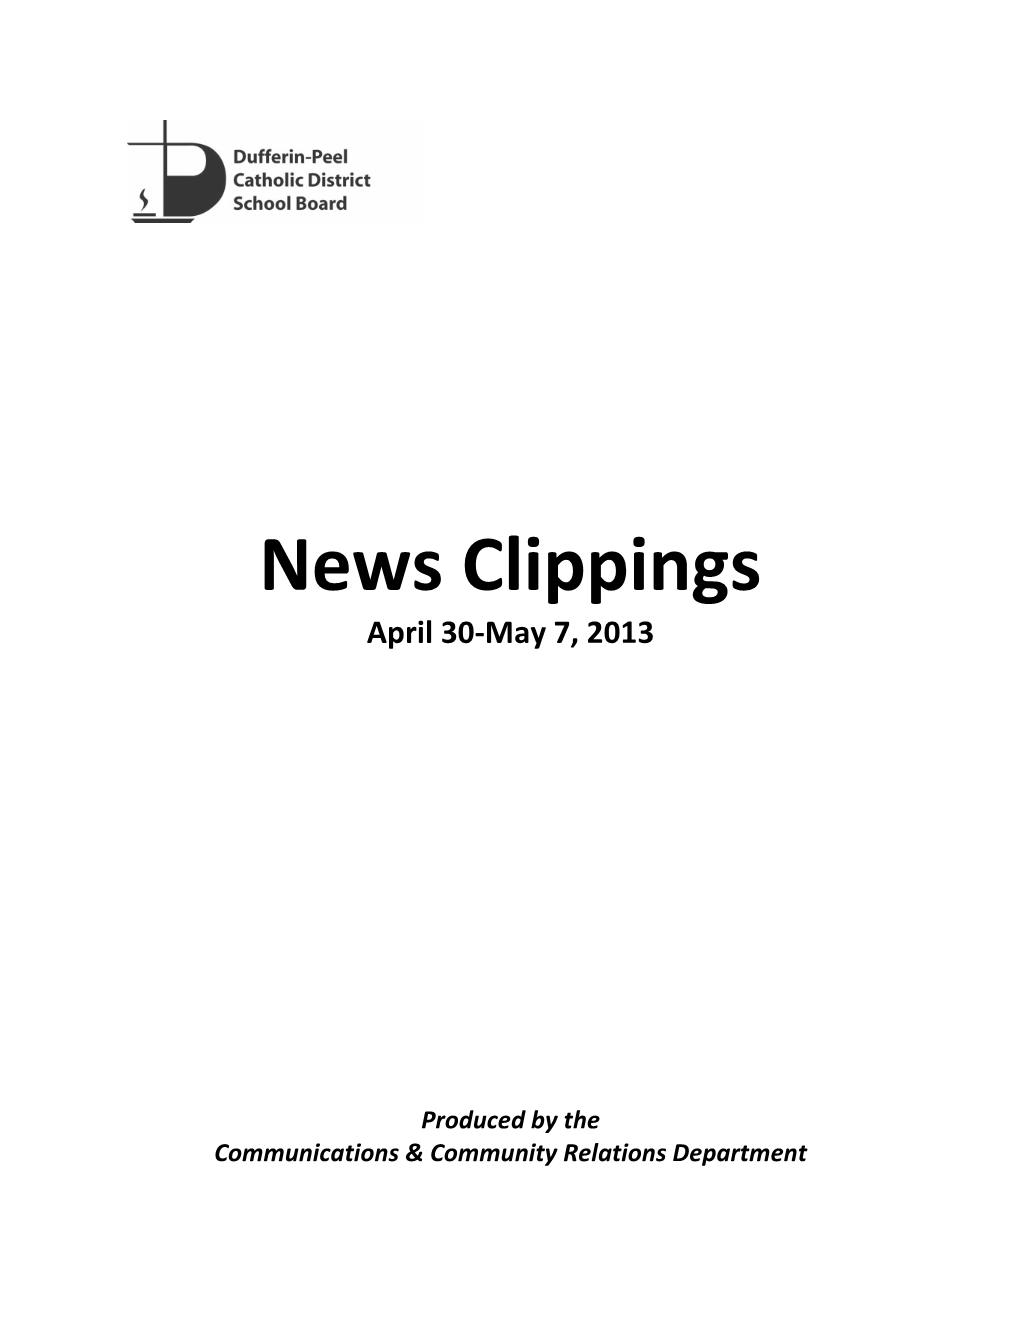 News Clippings April 30-May 7, 2013